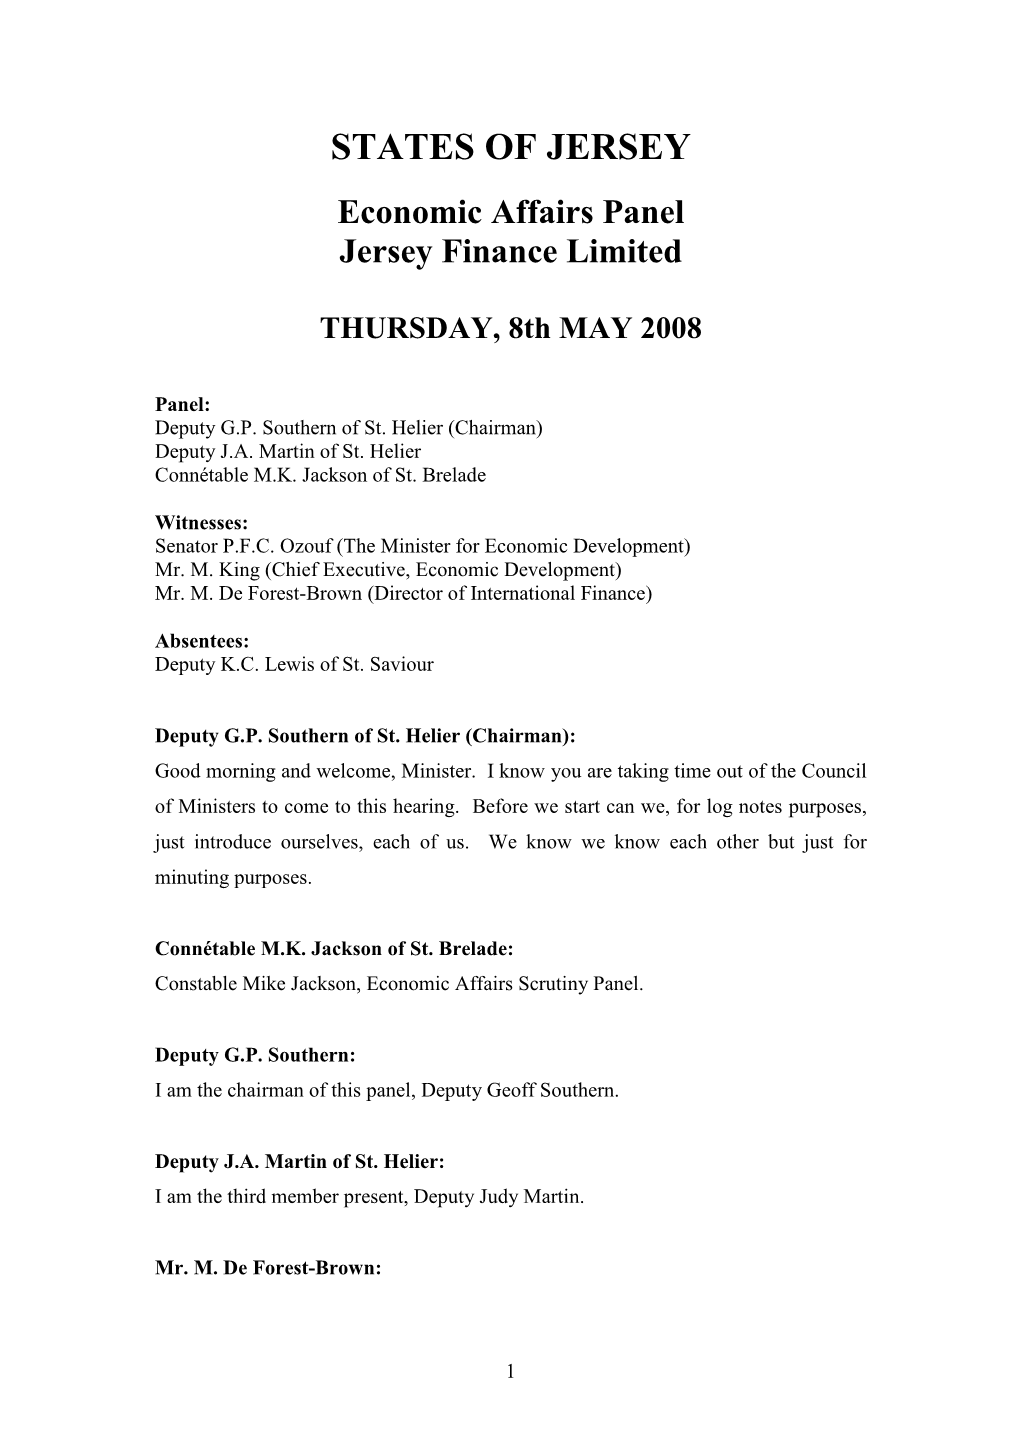 Economic Affairs Panel Jersey Finance Limited